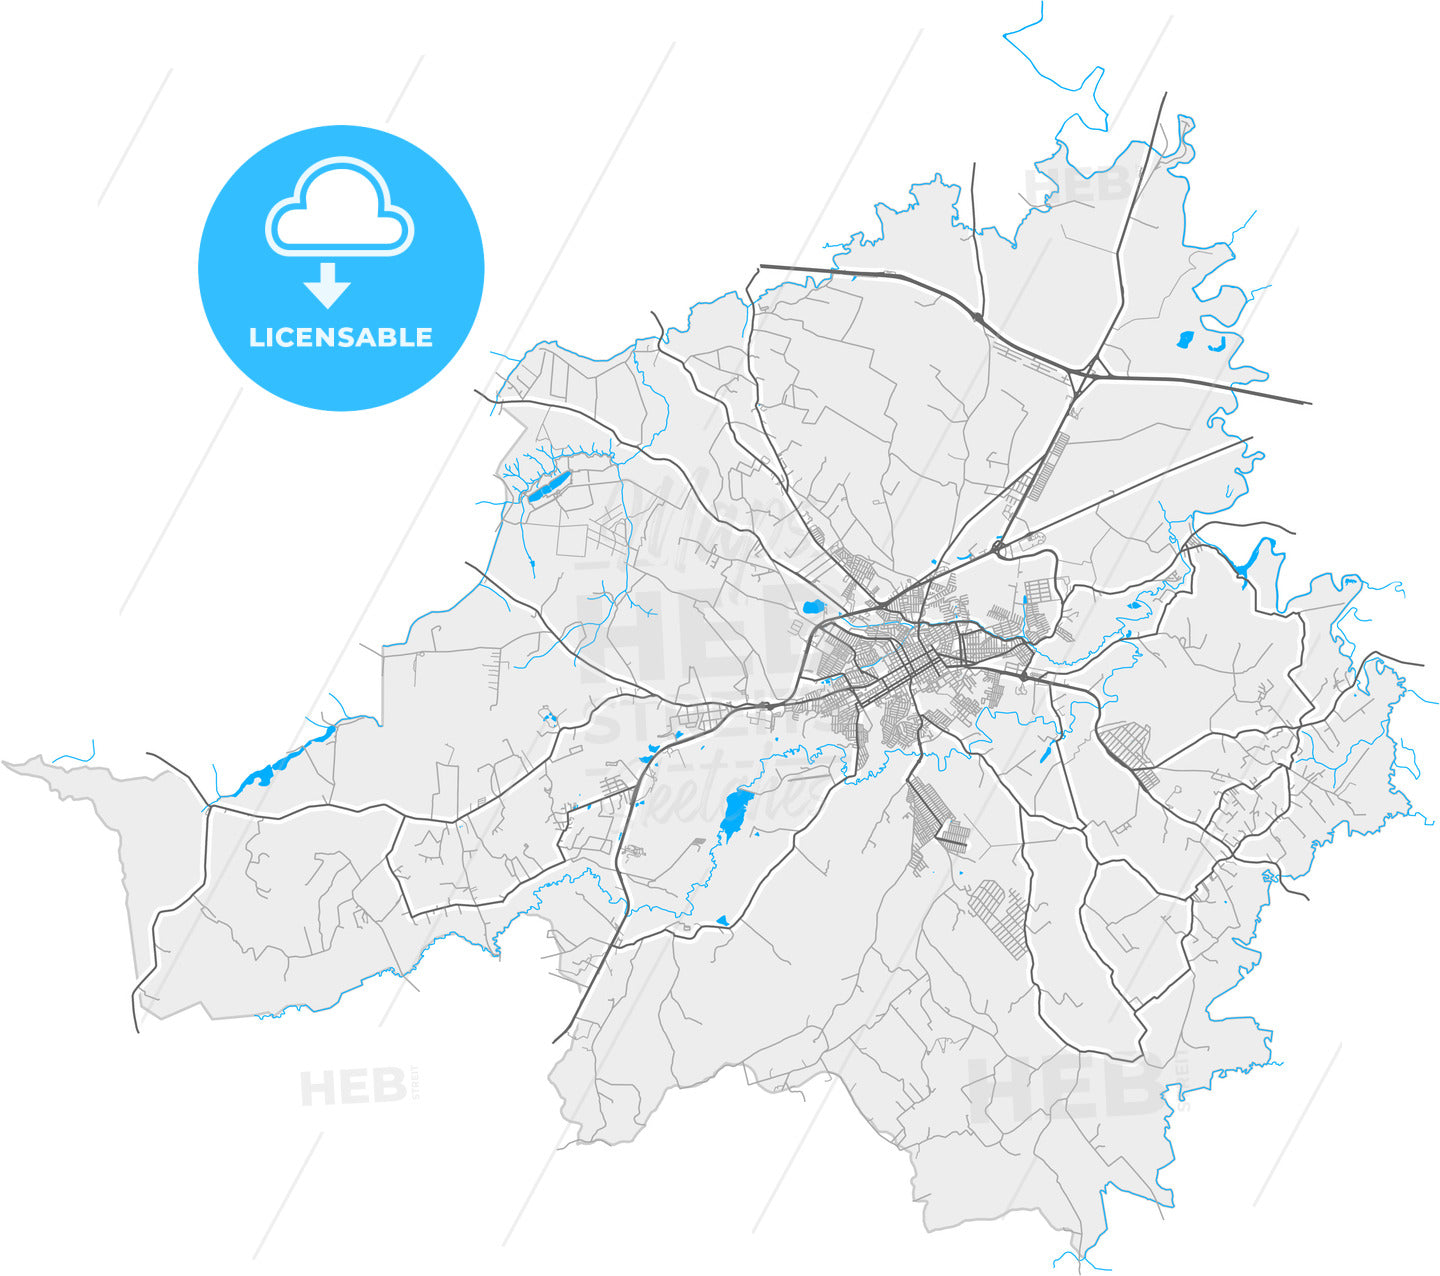 Tatui, Brazil, high quality vector map